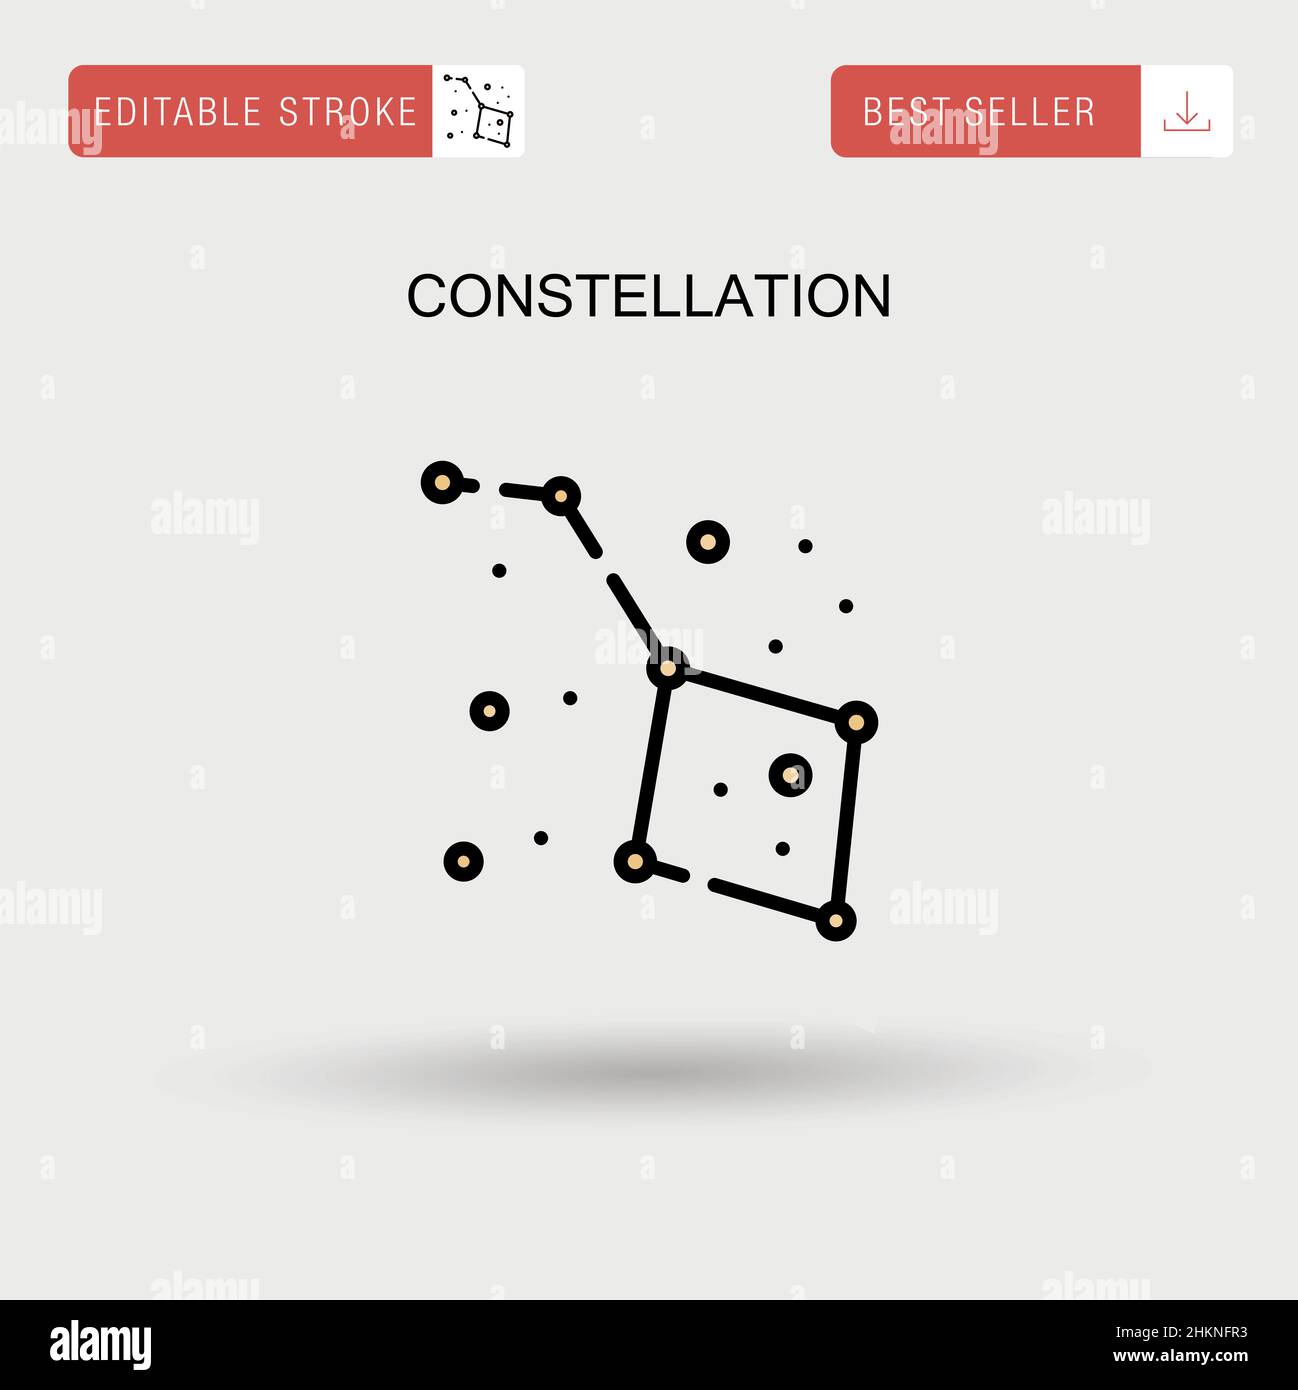 Constellation Simple vector icon. Stock Vector